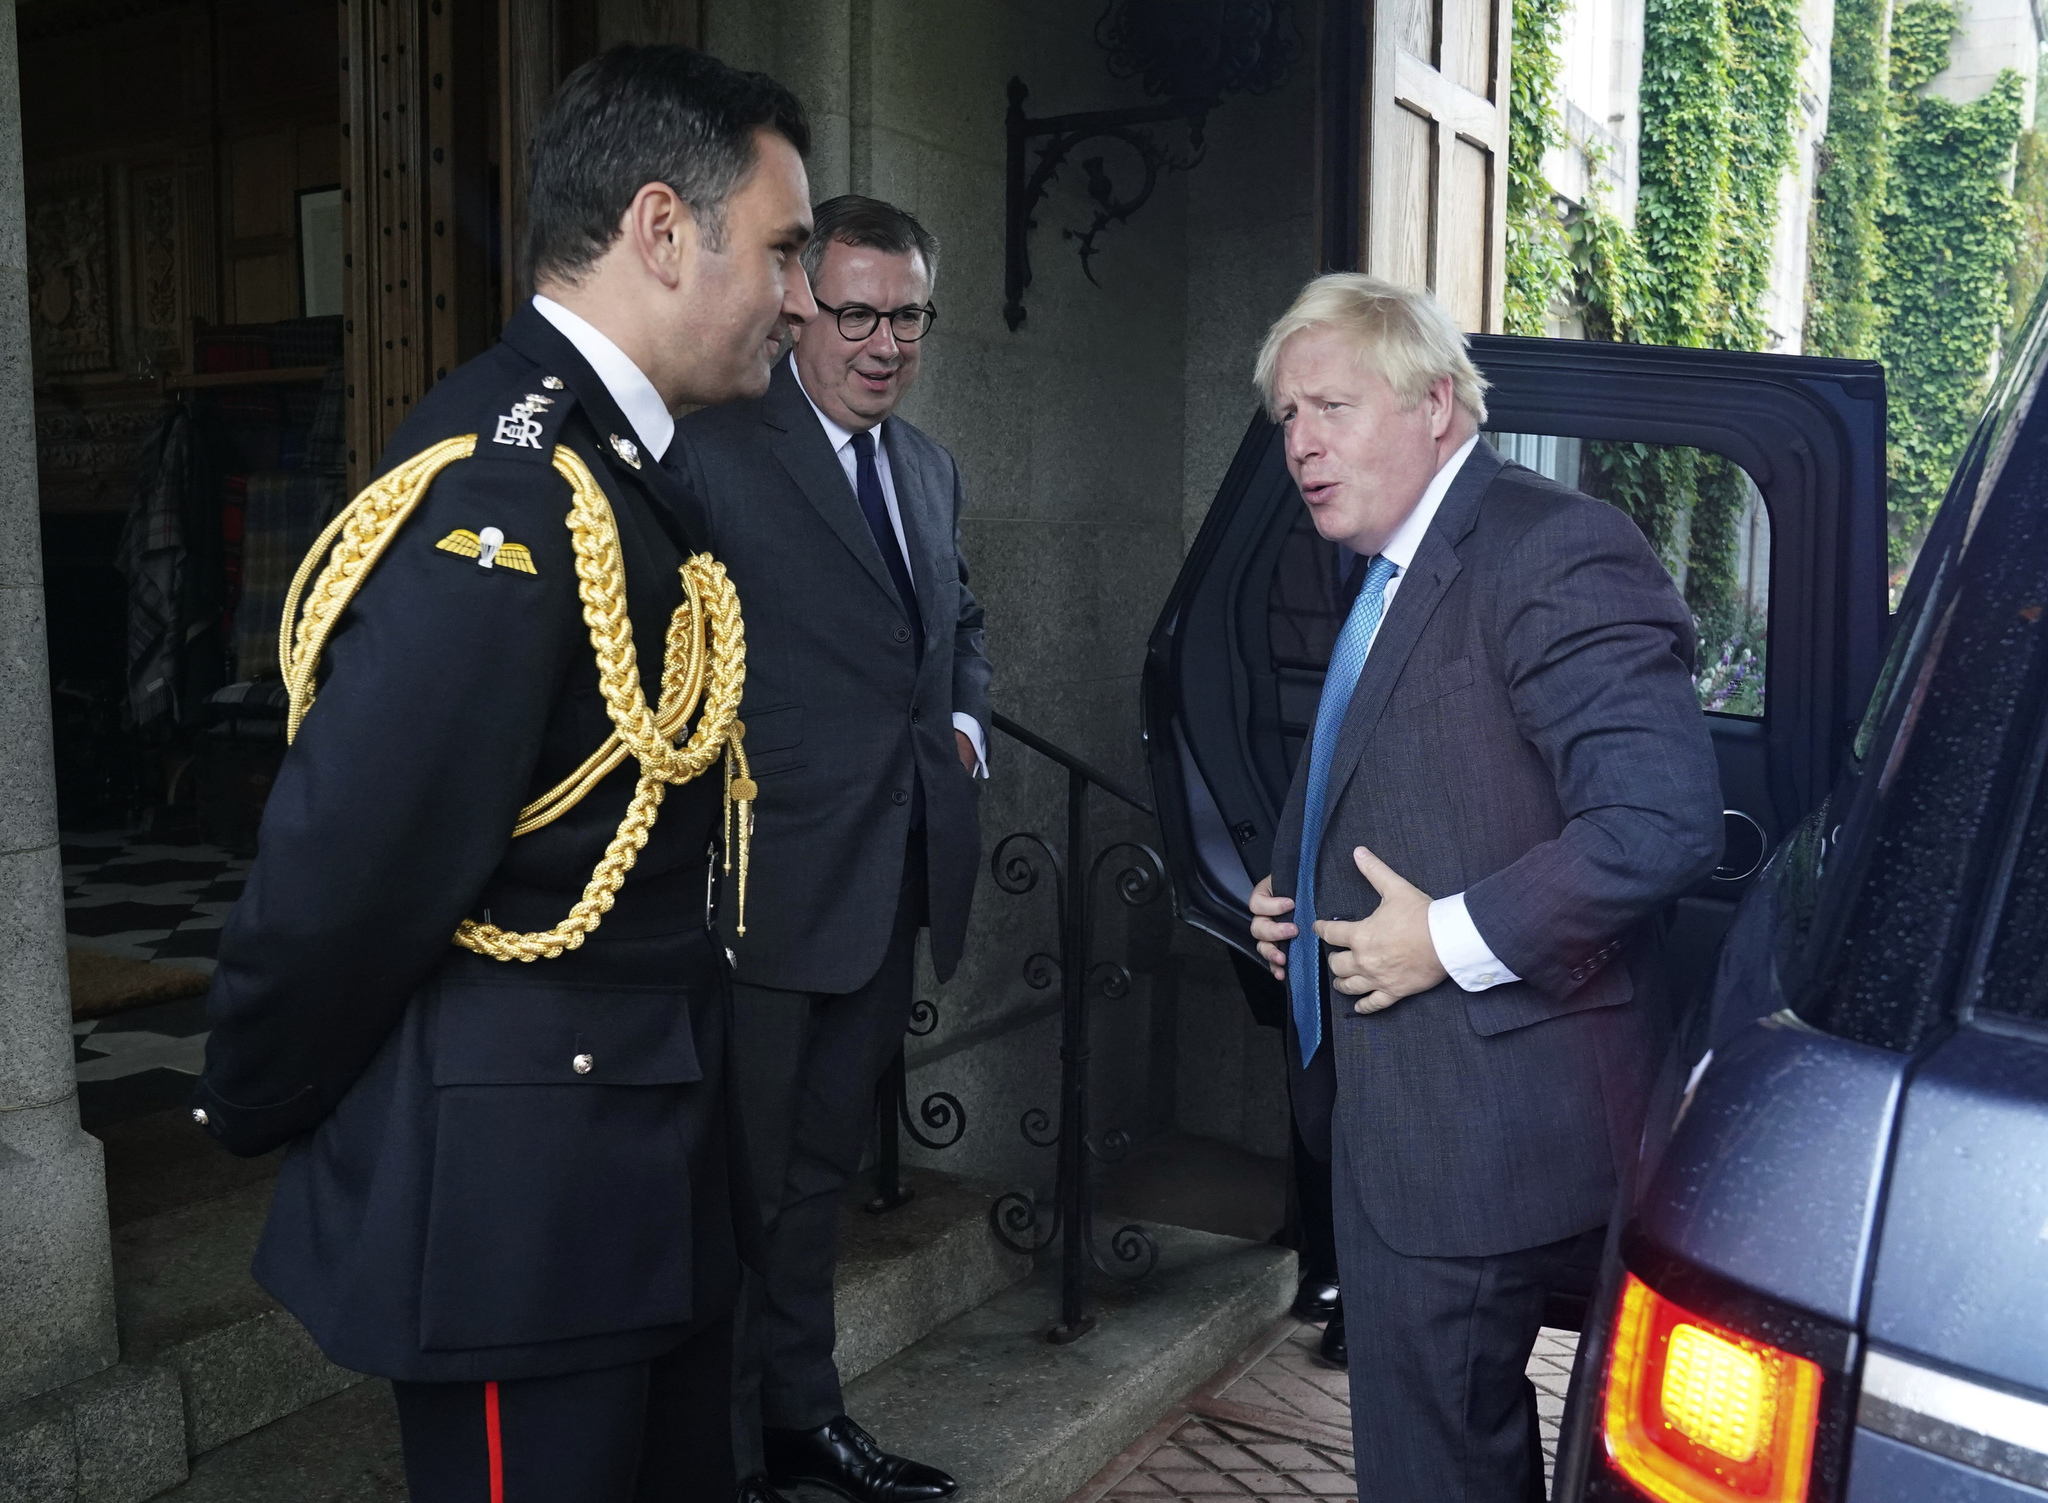 Tom White greeting Boris Johnson.